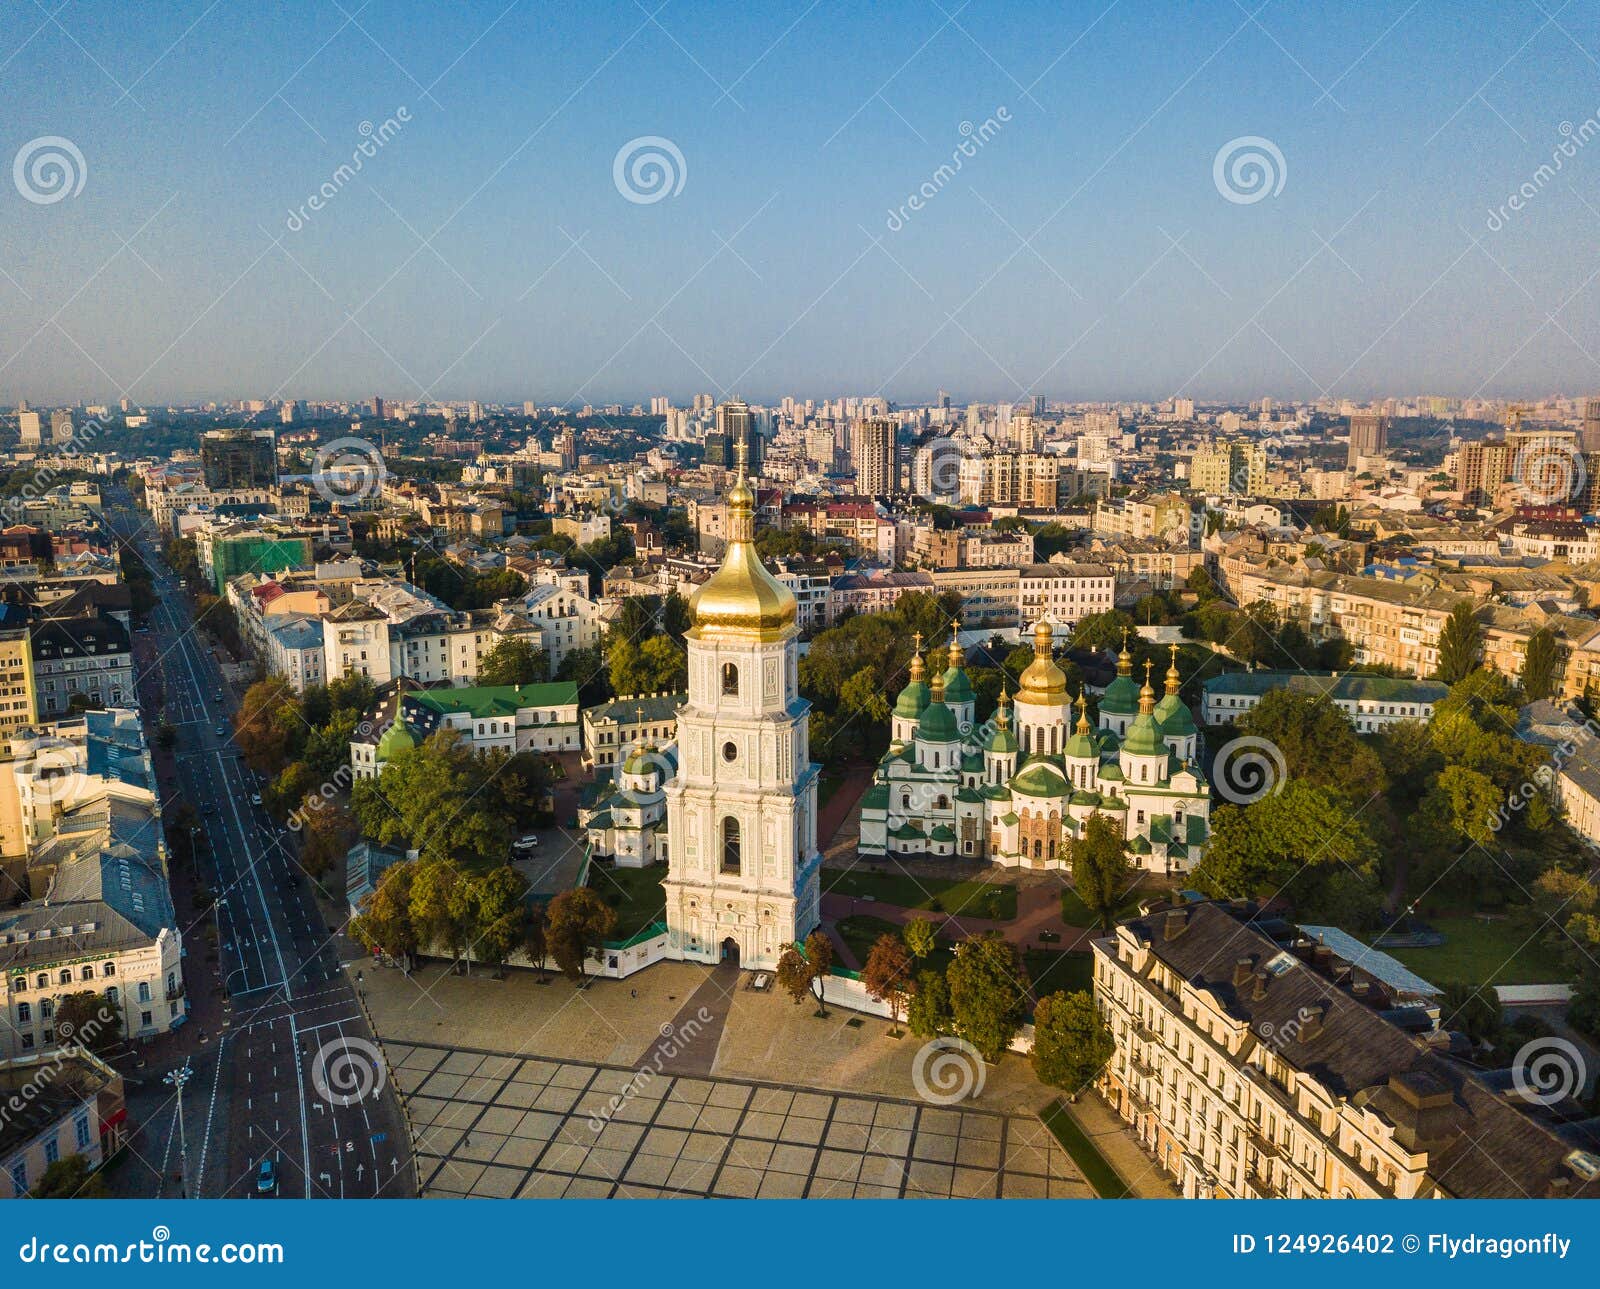 saint sophia`s cathedral, square. kiev kiyv ukraine with places of interest. aerial drone photo. sunrise light. city